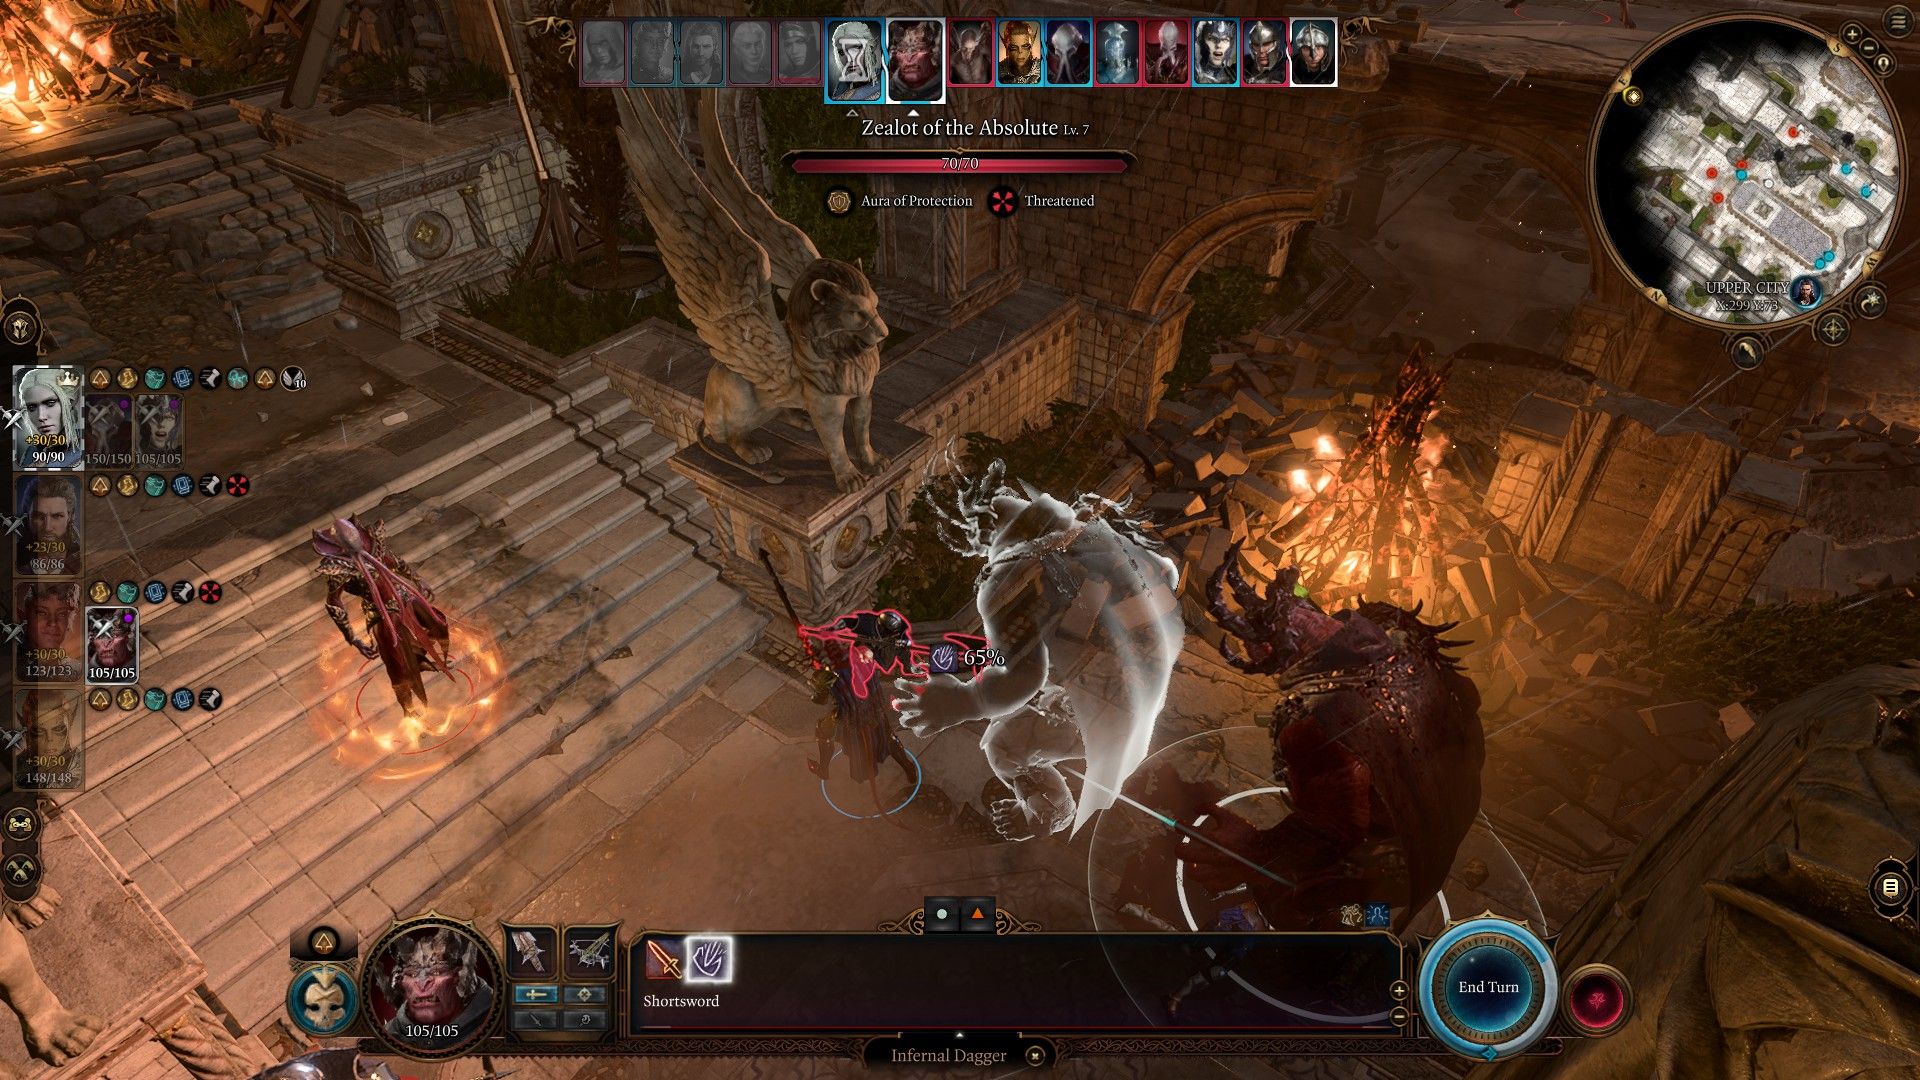 Allied Yurgir uses Infernal Dagger to strike enemy in High Hall Courtyard in Baldur's Gate 3